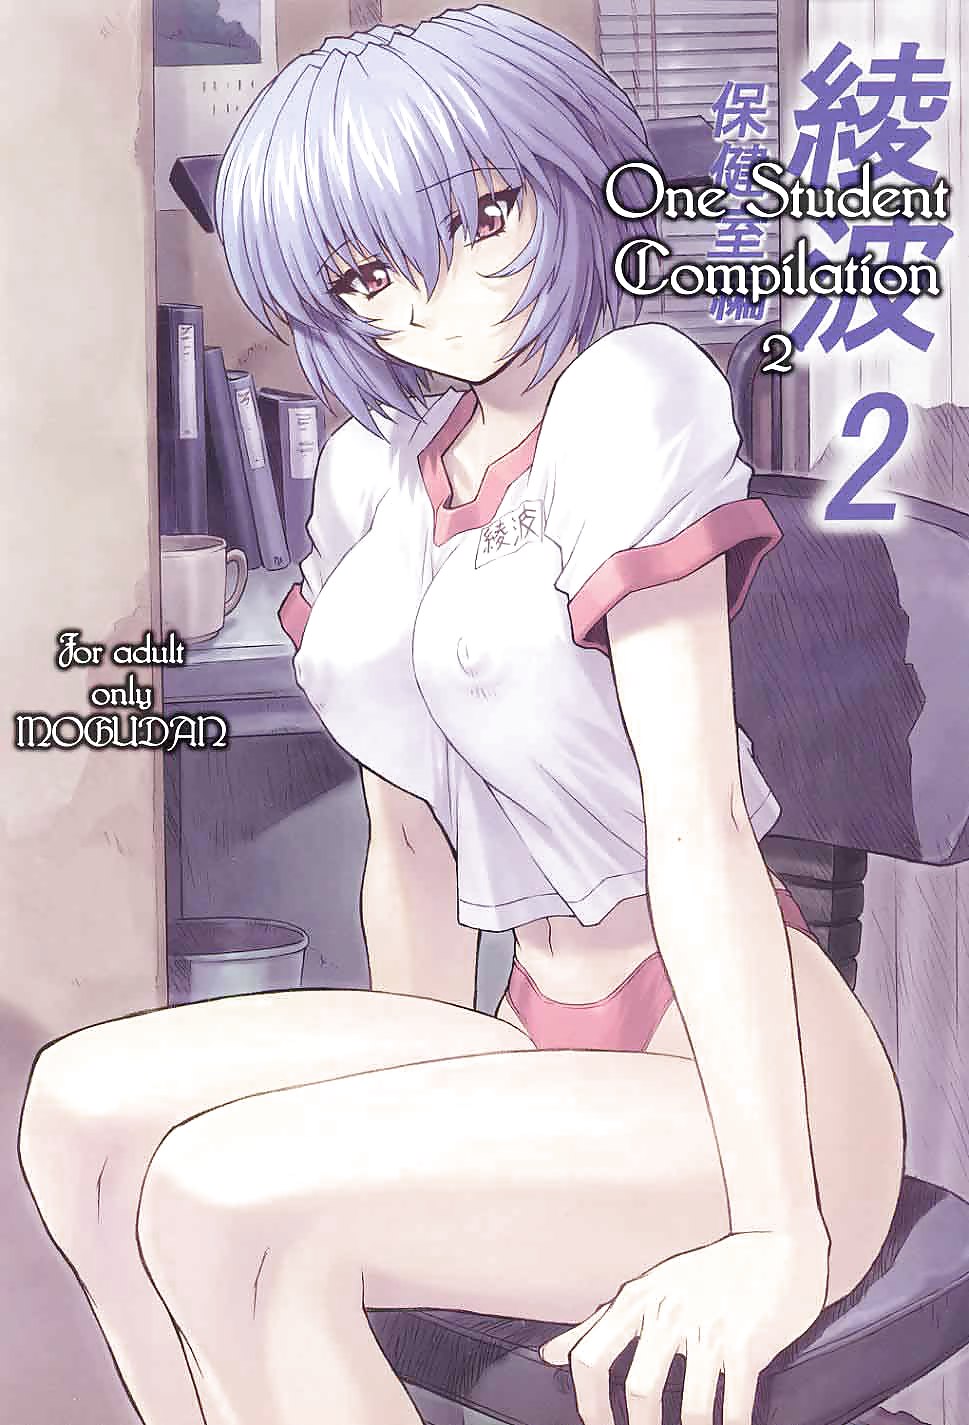 One Student Compilation: Rei Ayanami 2(Mogudan) #8978120